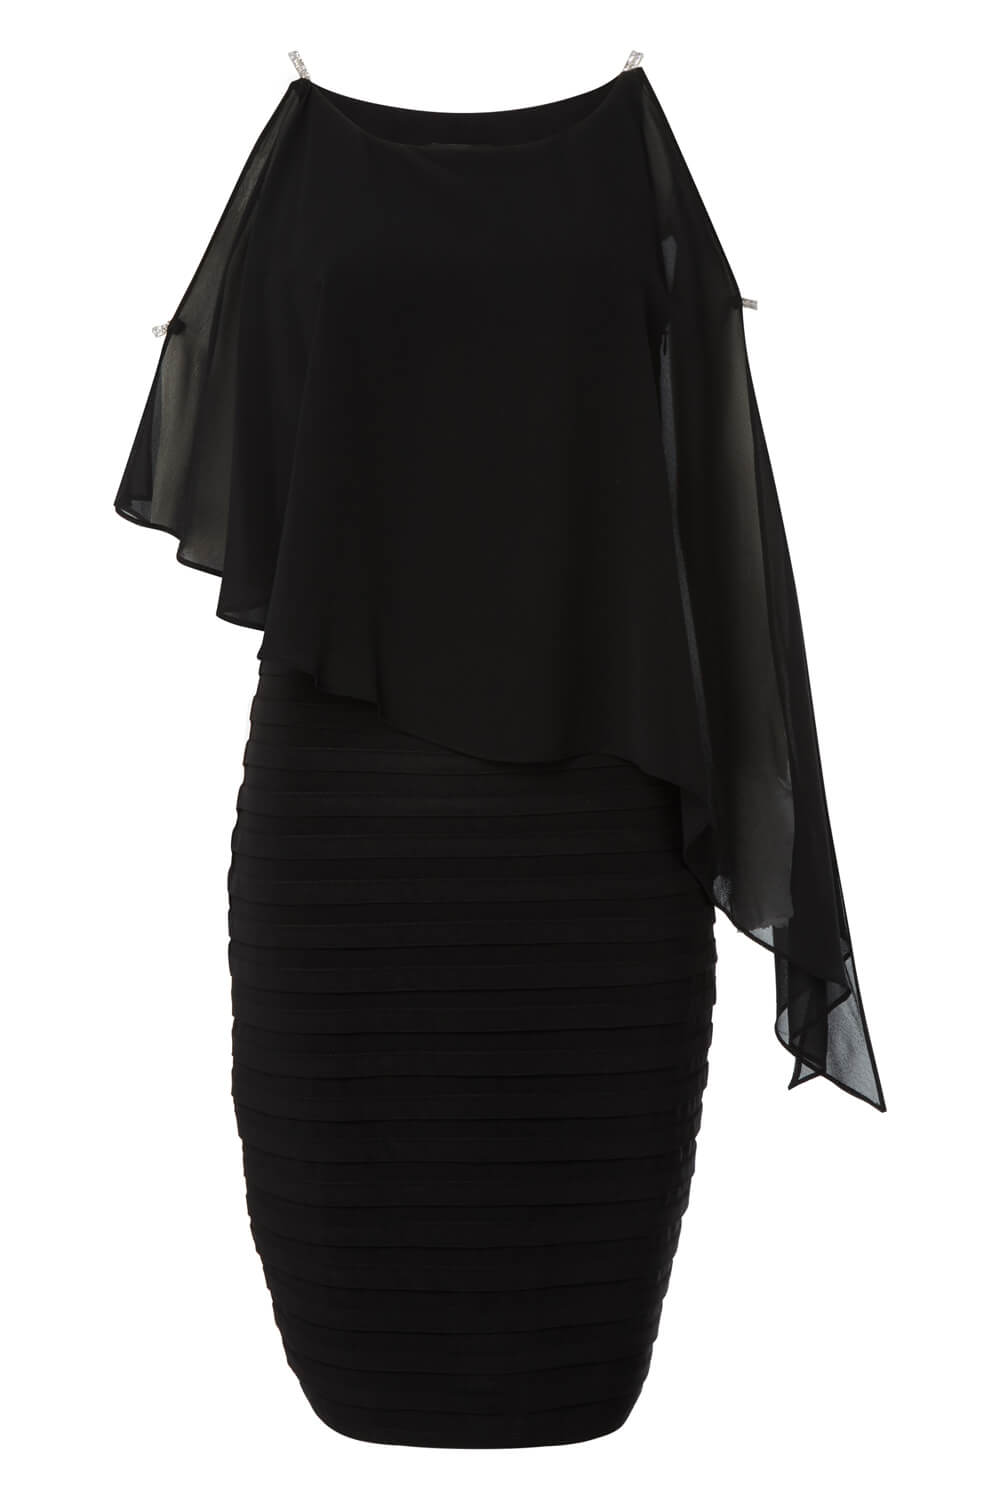 Black Diamante Trim Chiffon Overlay Dress, Image 6 of 6